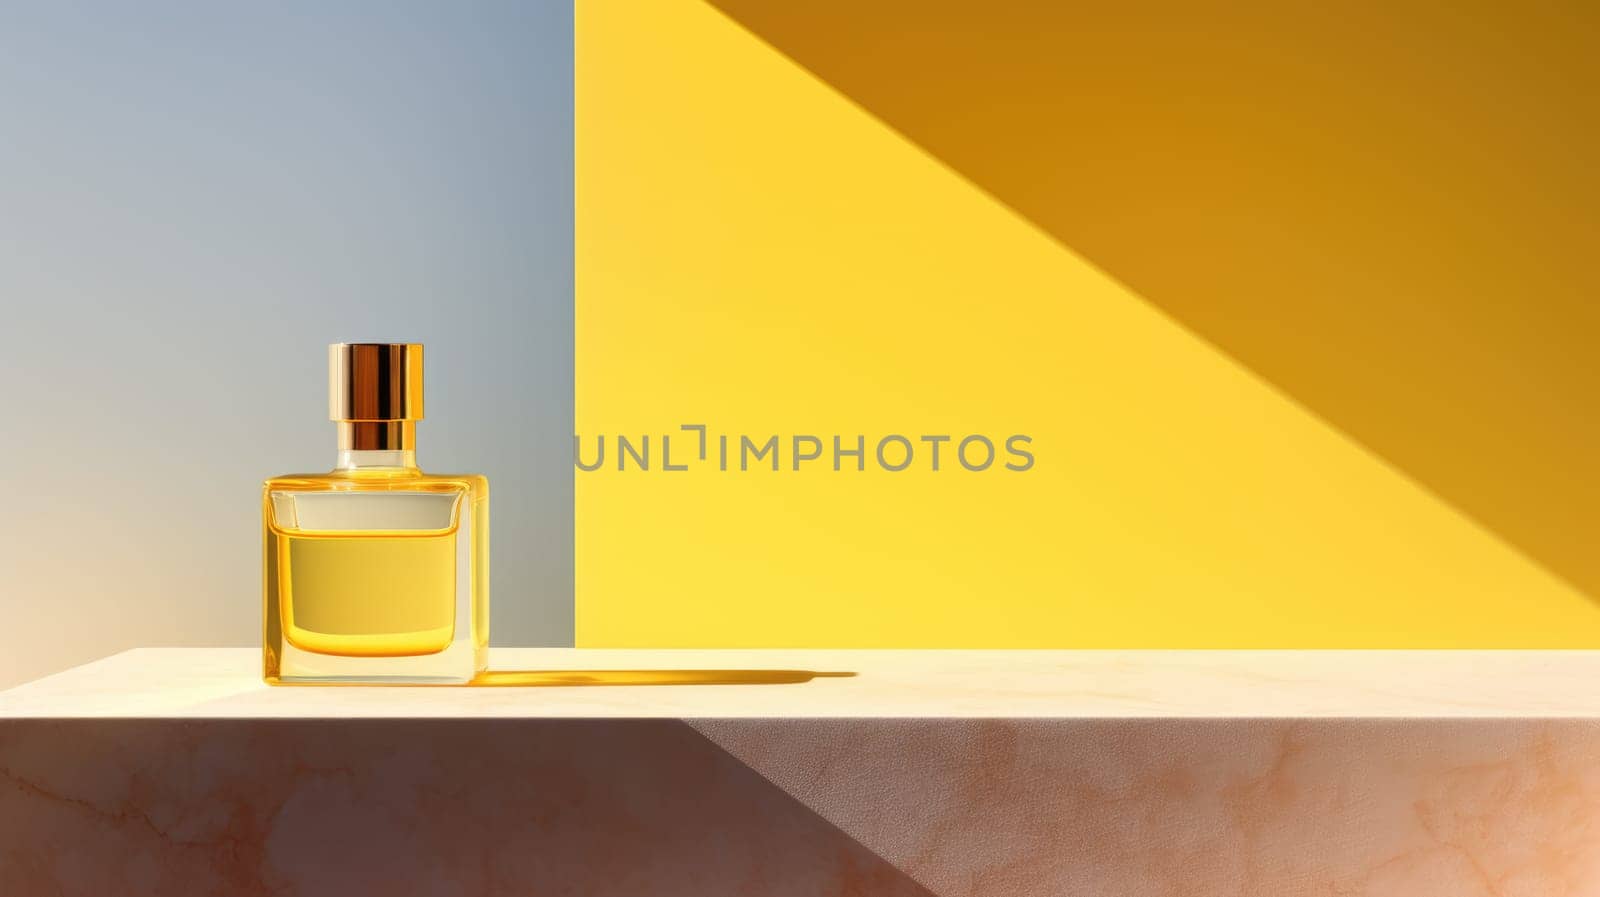 Transparent yellow glass perfume bottle mockup on pedestal with minimalist background. Eau de toilette. Mockup, spring flat lay